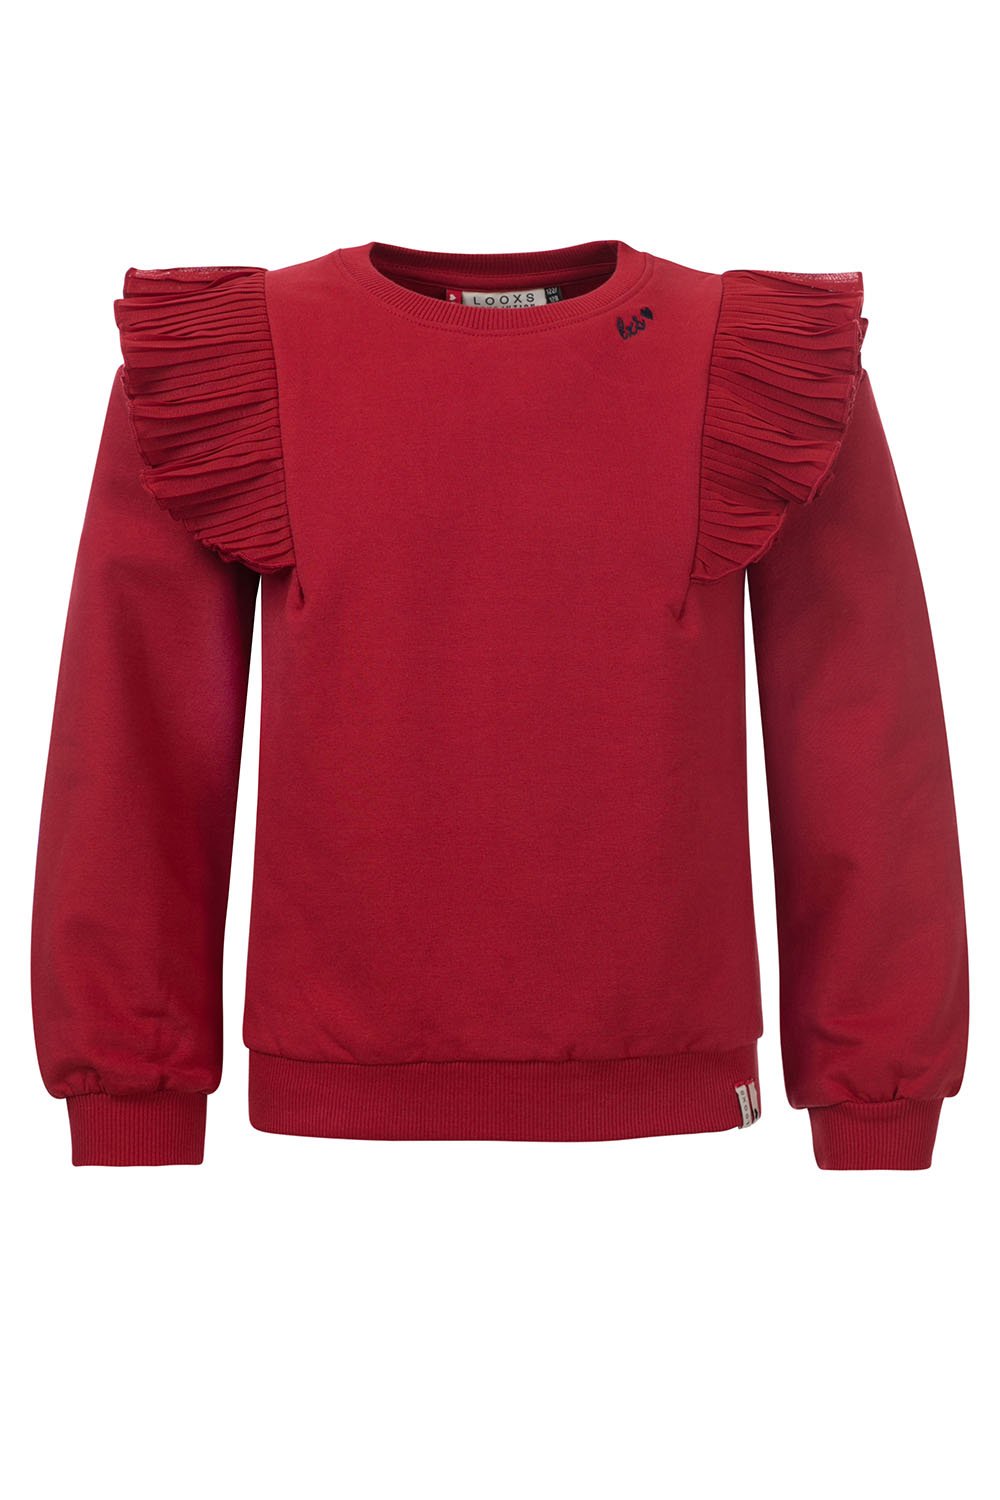 Meisjes Little sweater van LOOXS Little in de kleur Deep Red in maat 128.